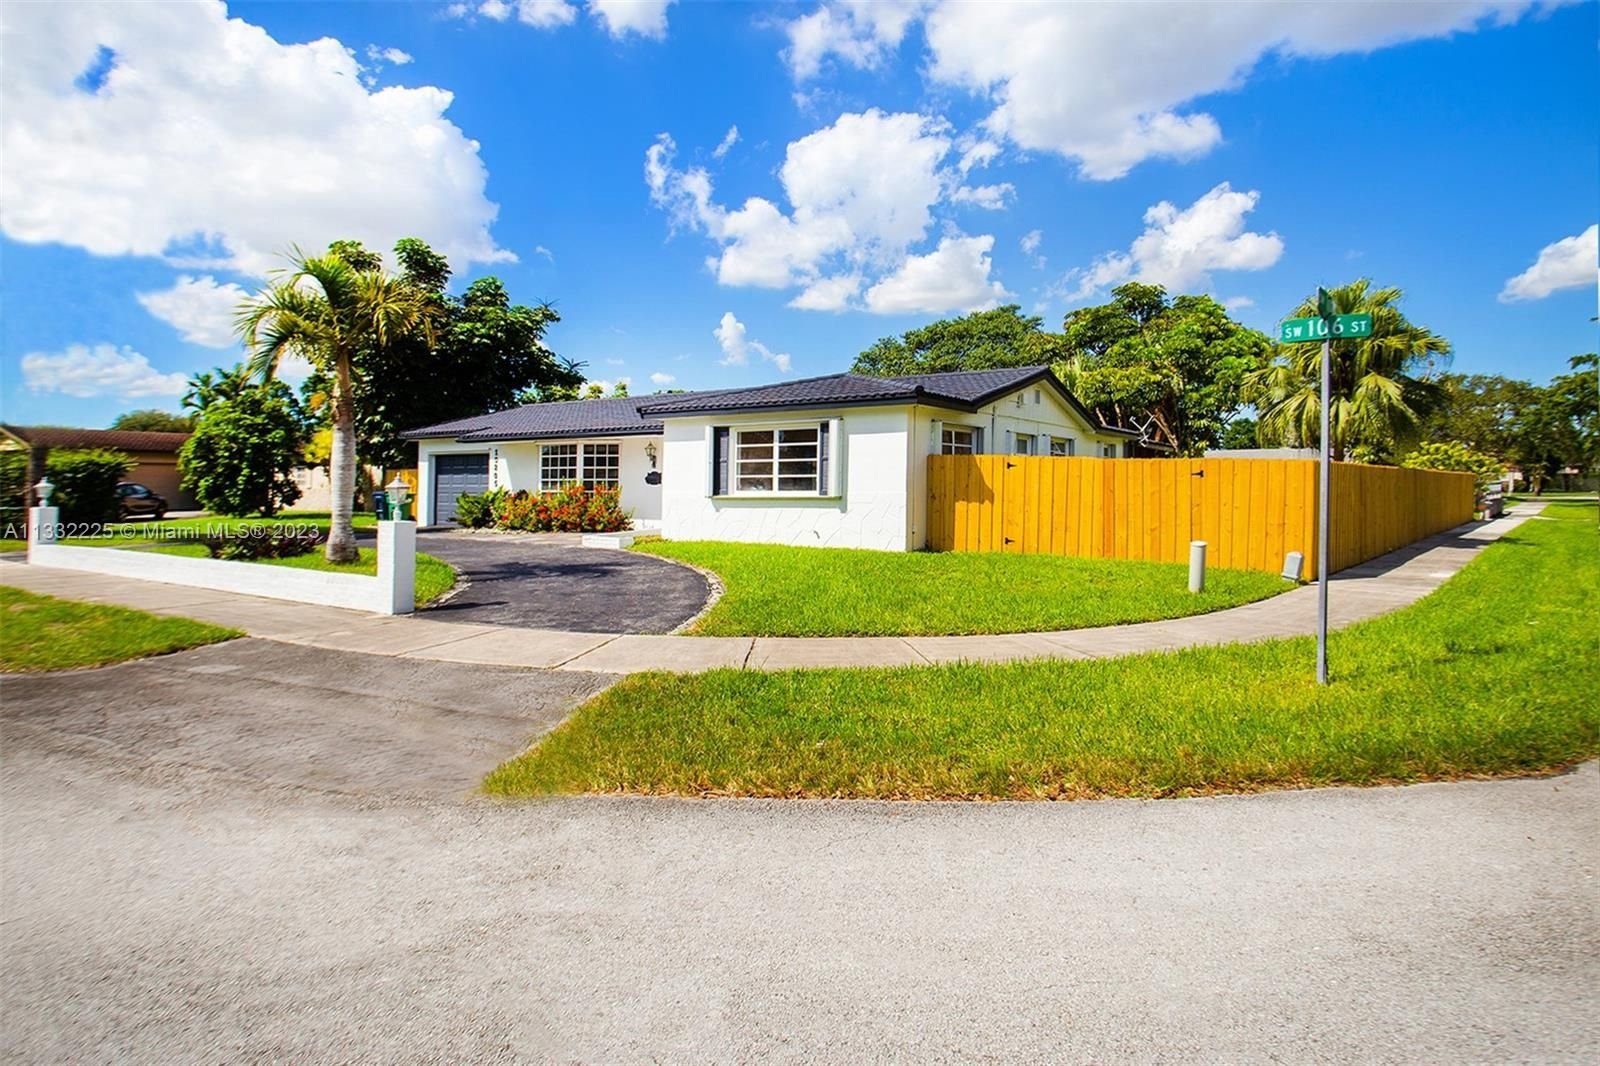 Real estate property located at , Miami-Dade County, Miami, FL